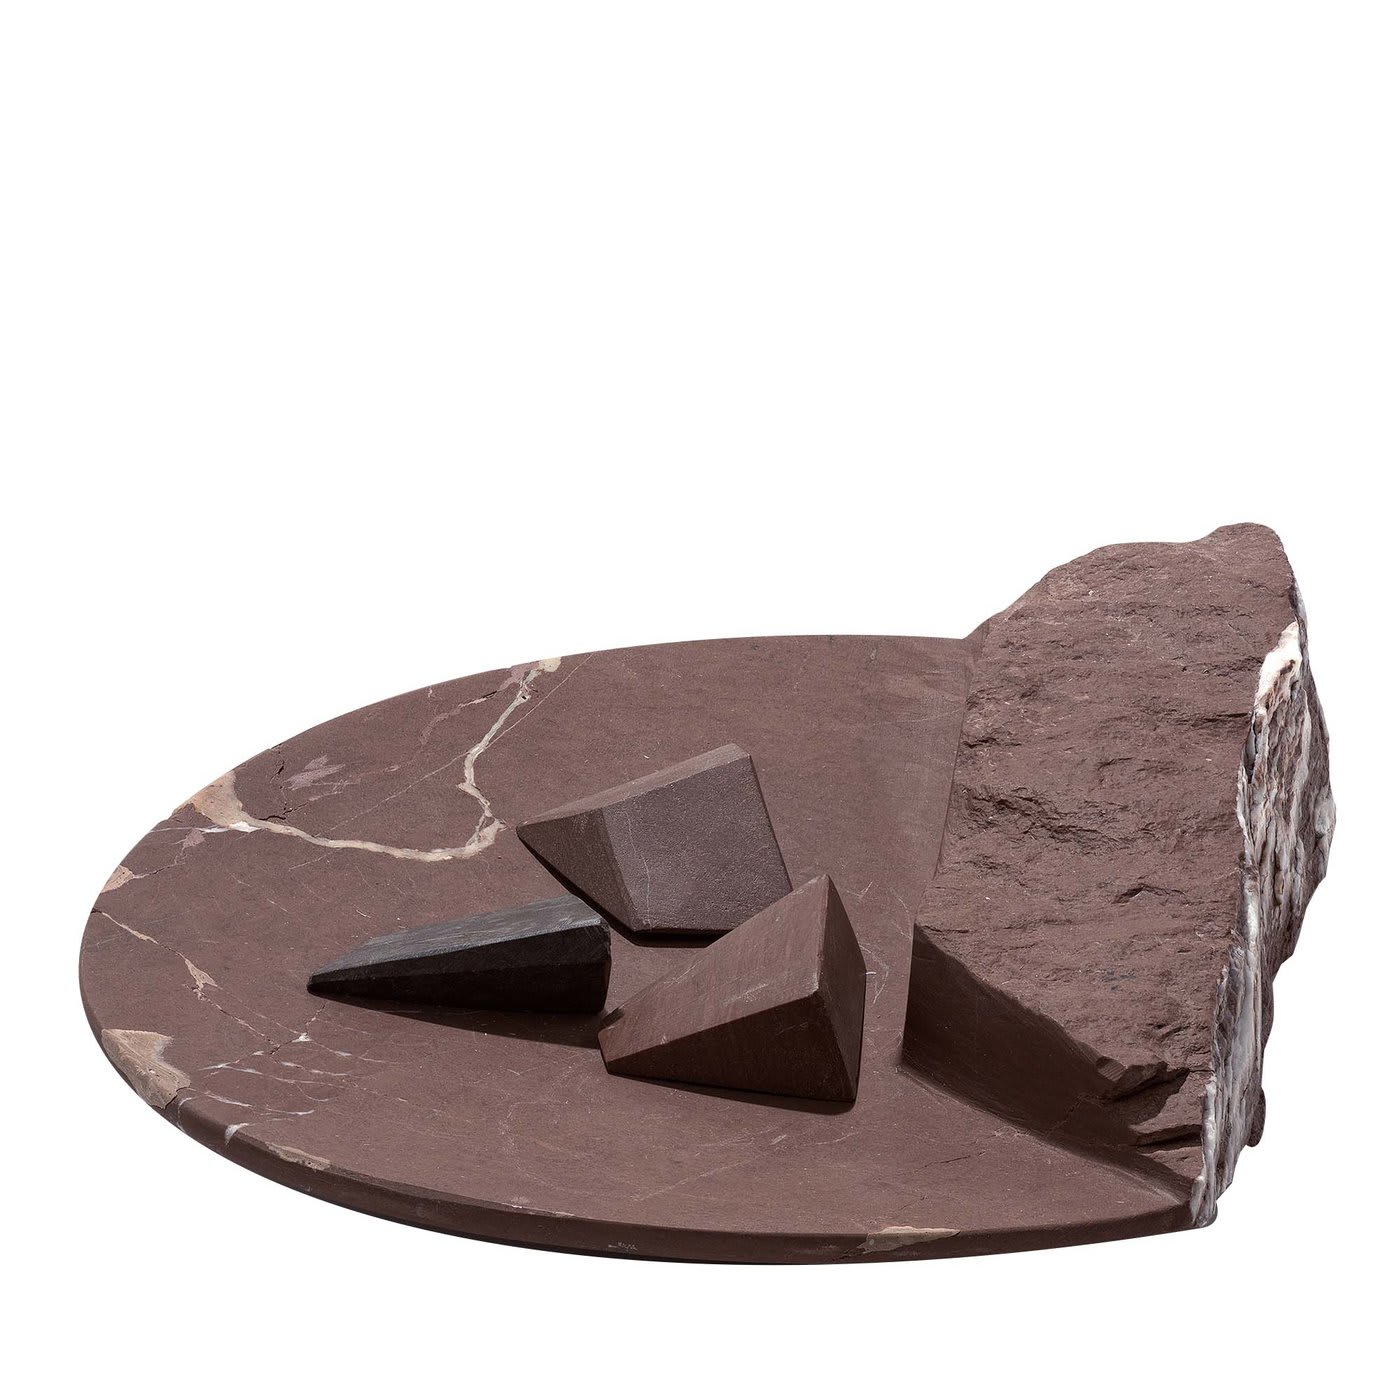 Neolitica F1 Centerpiece - Alfaterna Marmi